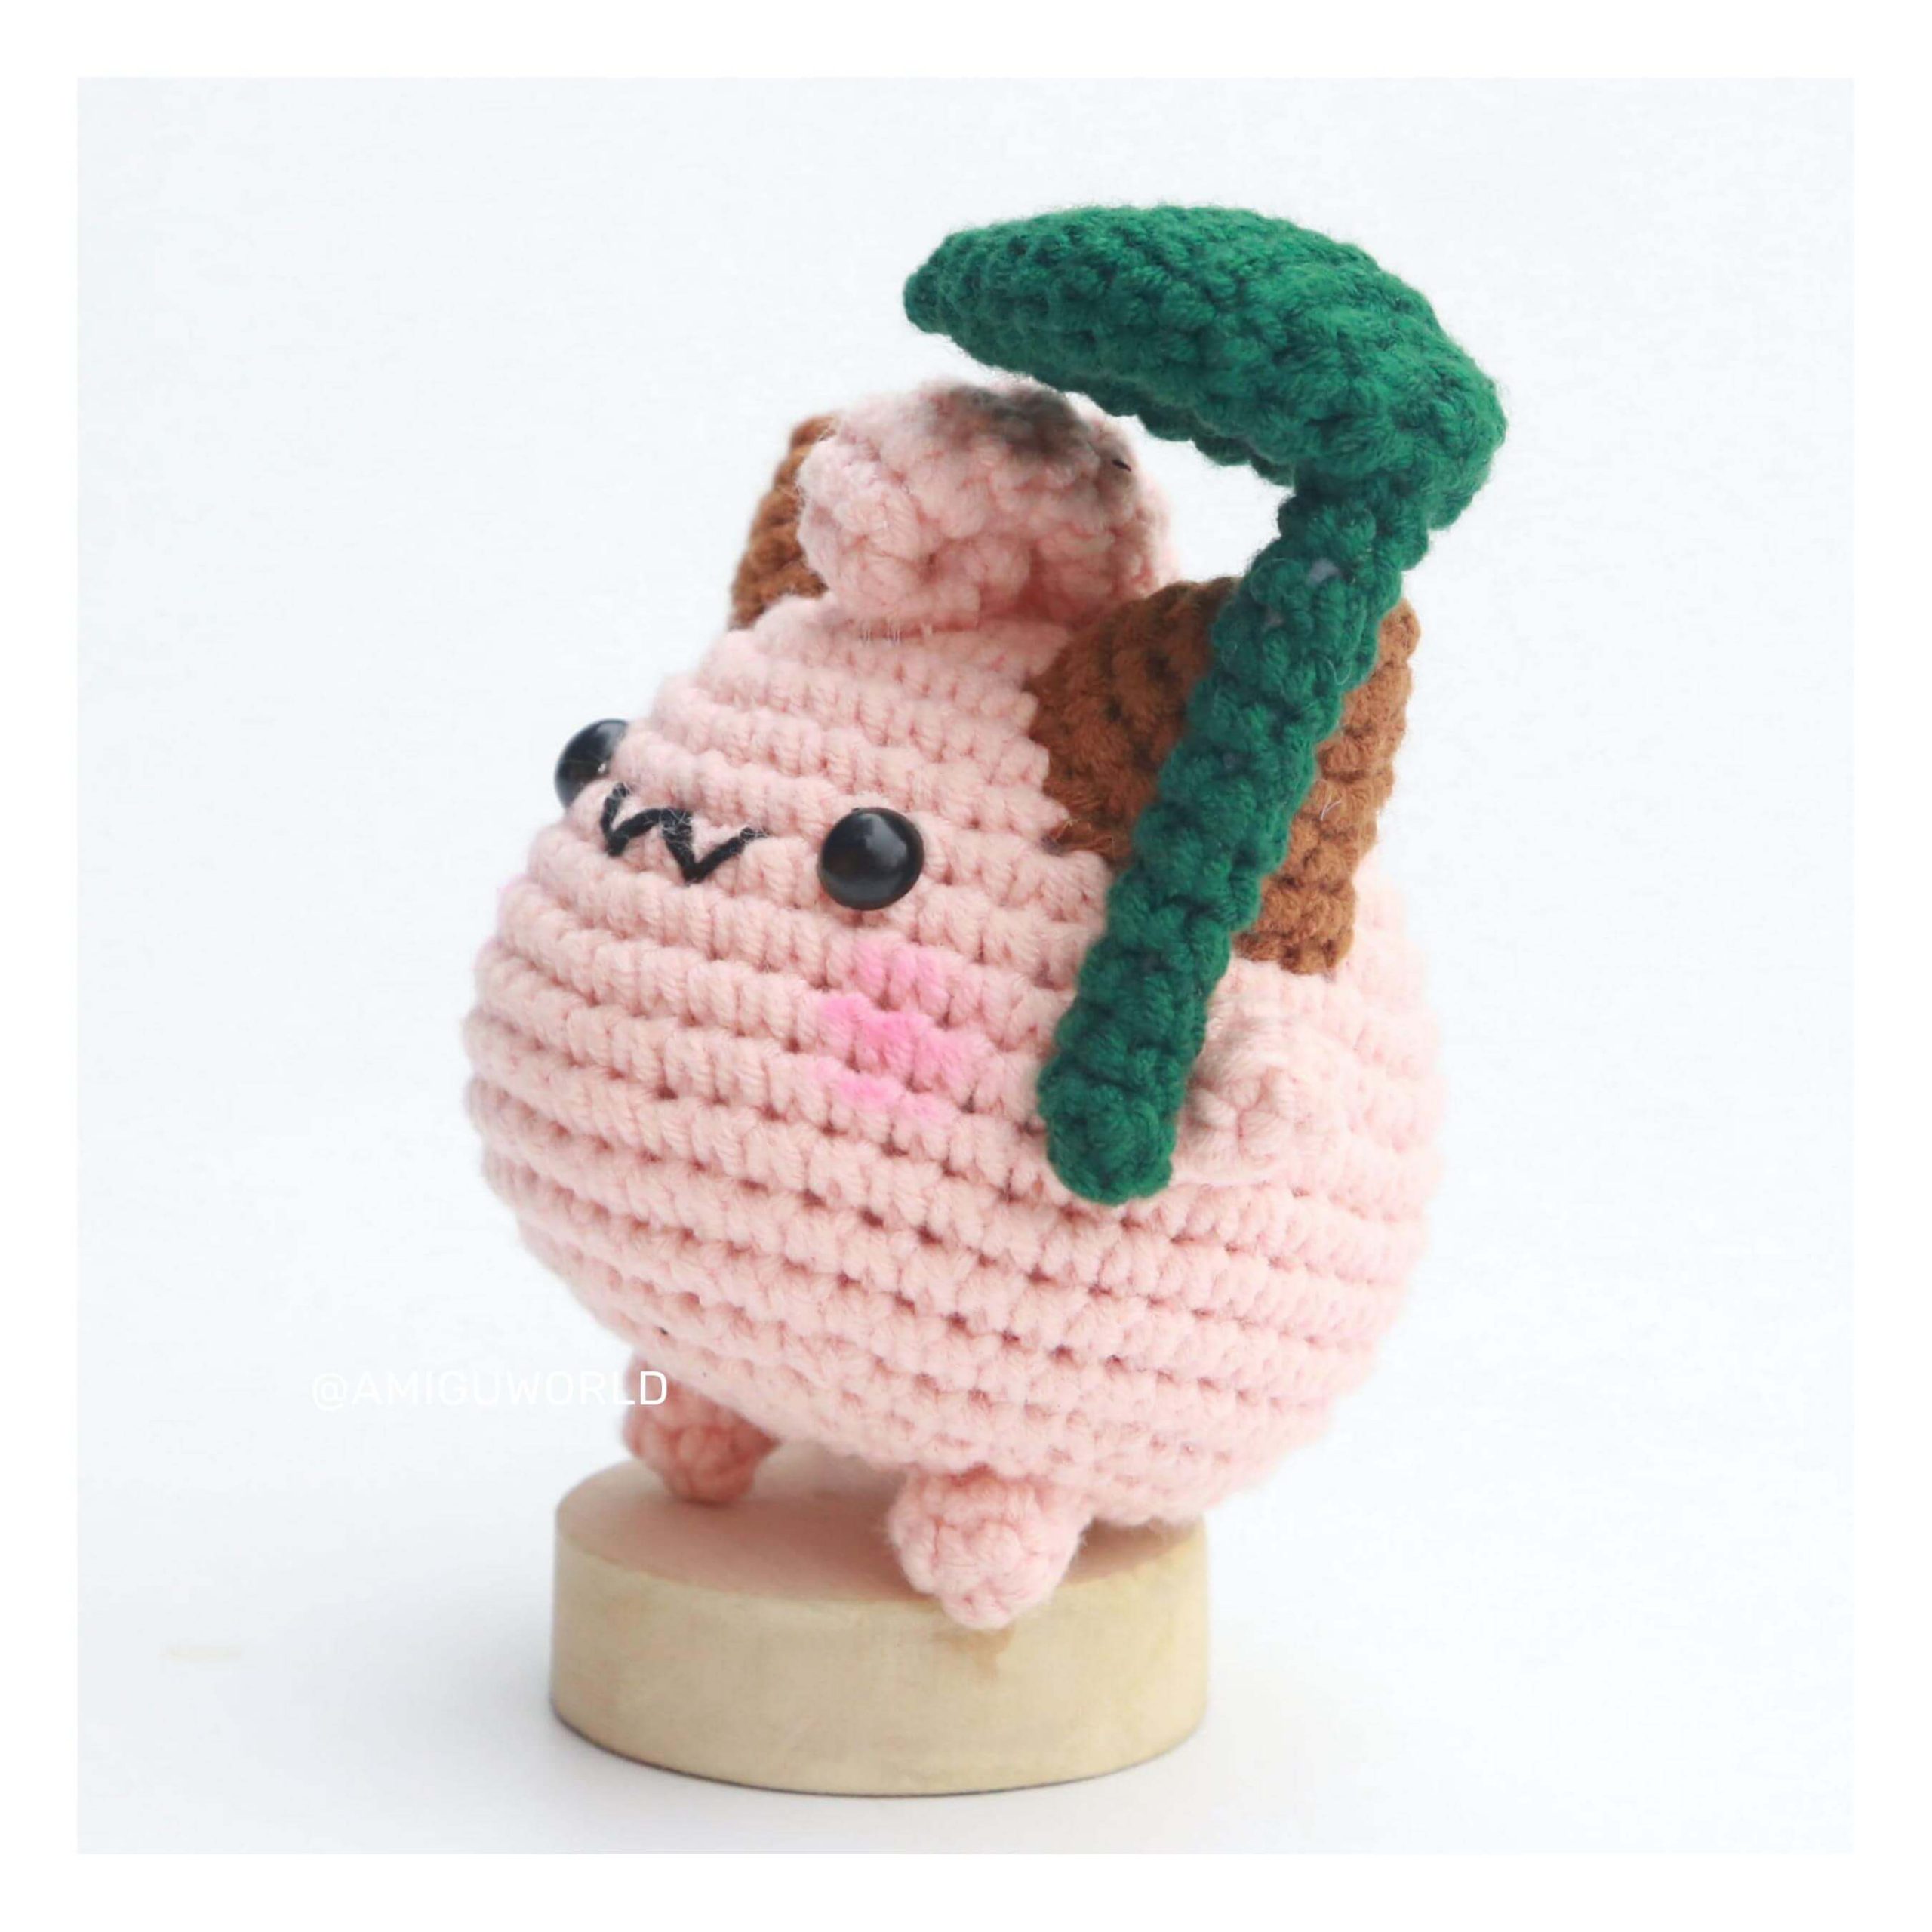 Cleffa-amigurumi-crochet-pattern-by-AmiguWorld (5)